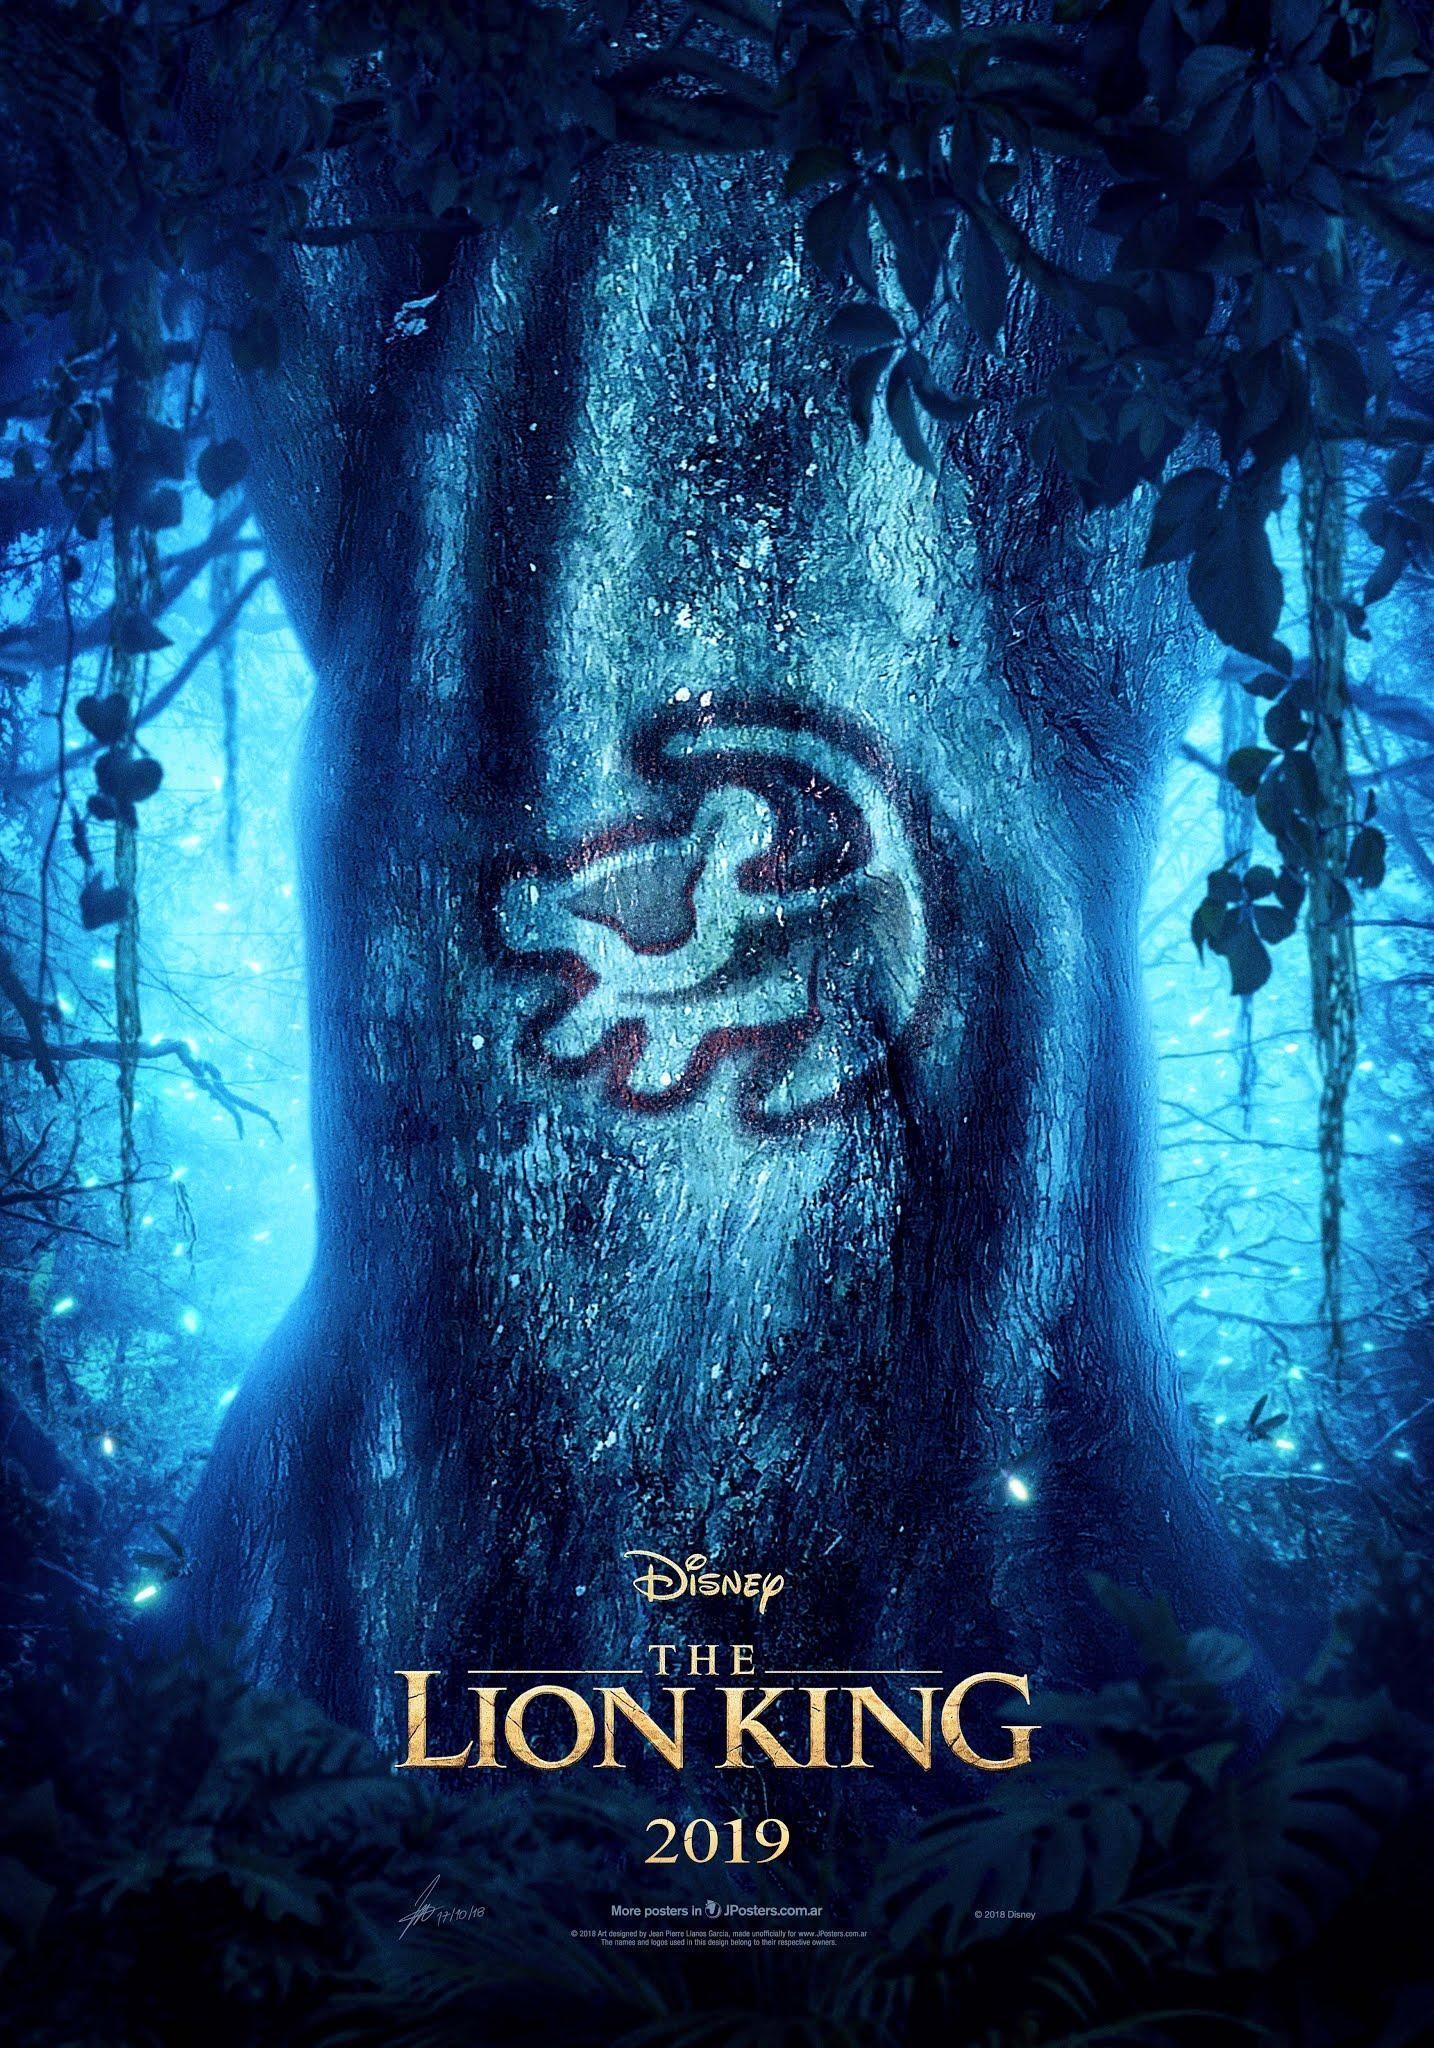 Disney's Lion King Movie Logo - The Lion King (2019) [1434 x 2048] | MoviePosterPorn in 2019 | Movie ...